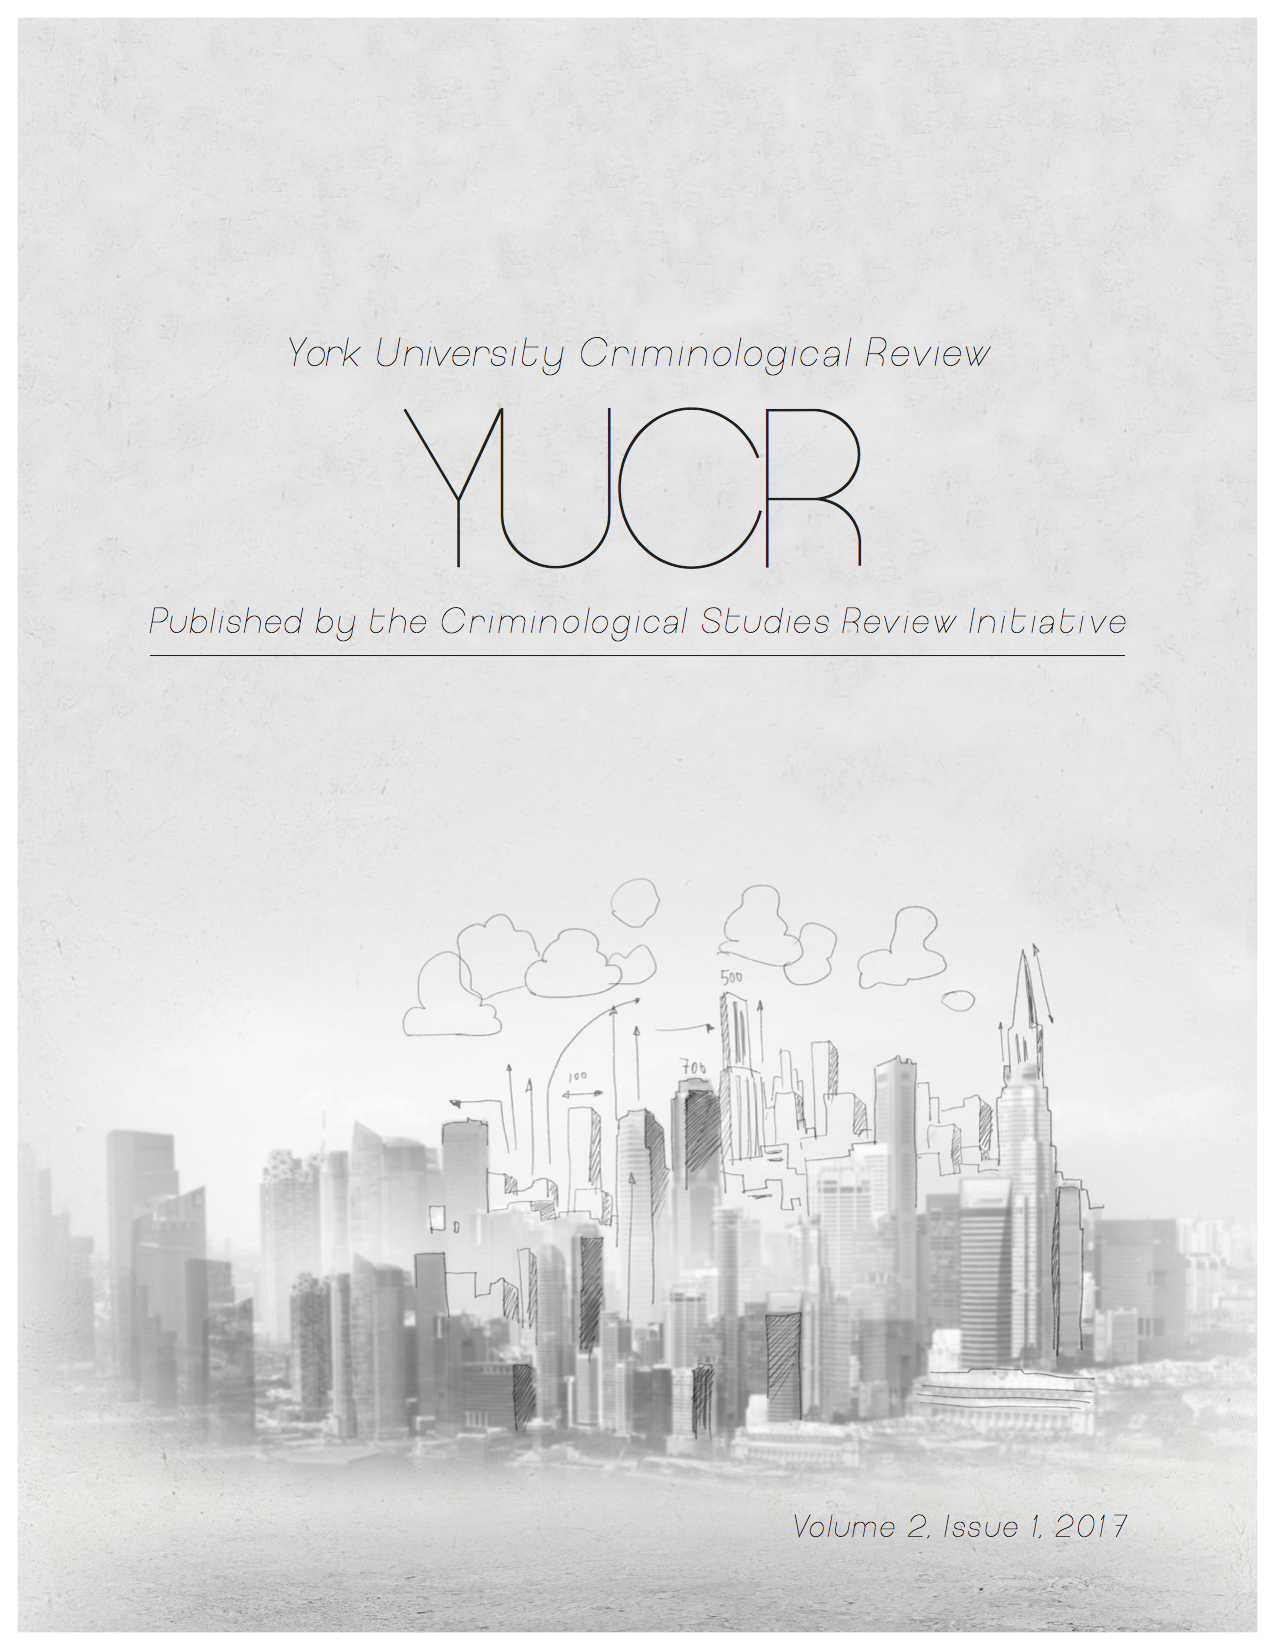 					View Vol. 2 No. 1 (2017): York University Criminological Review
				